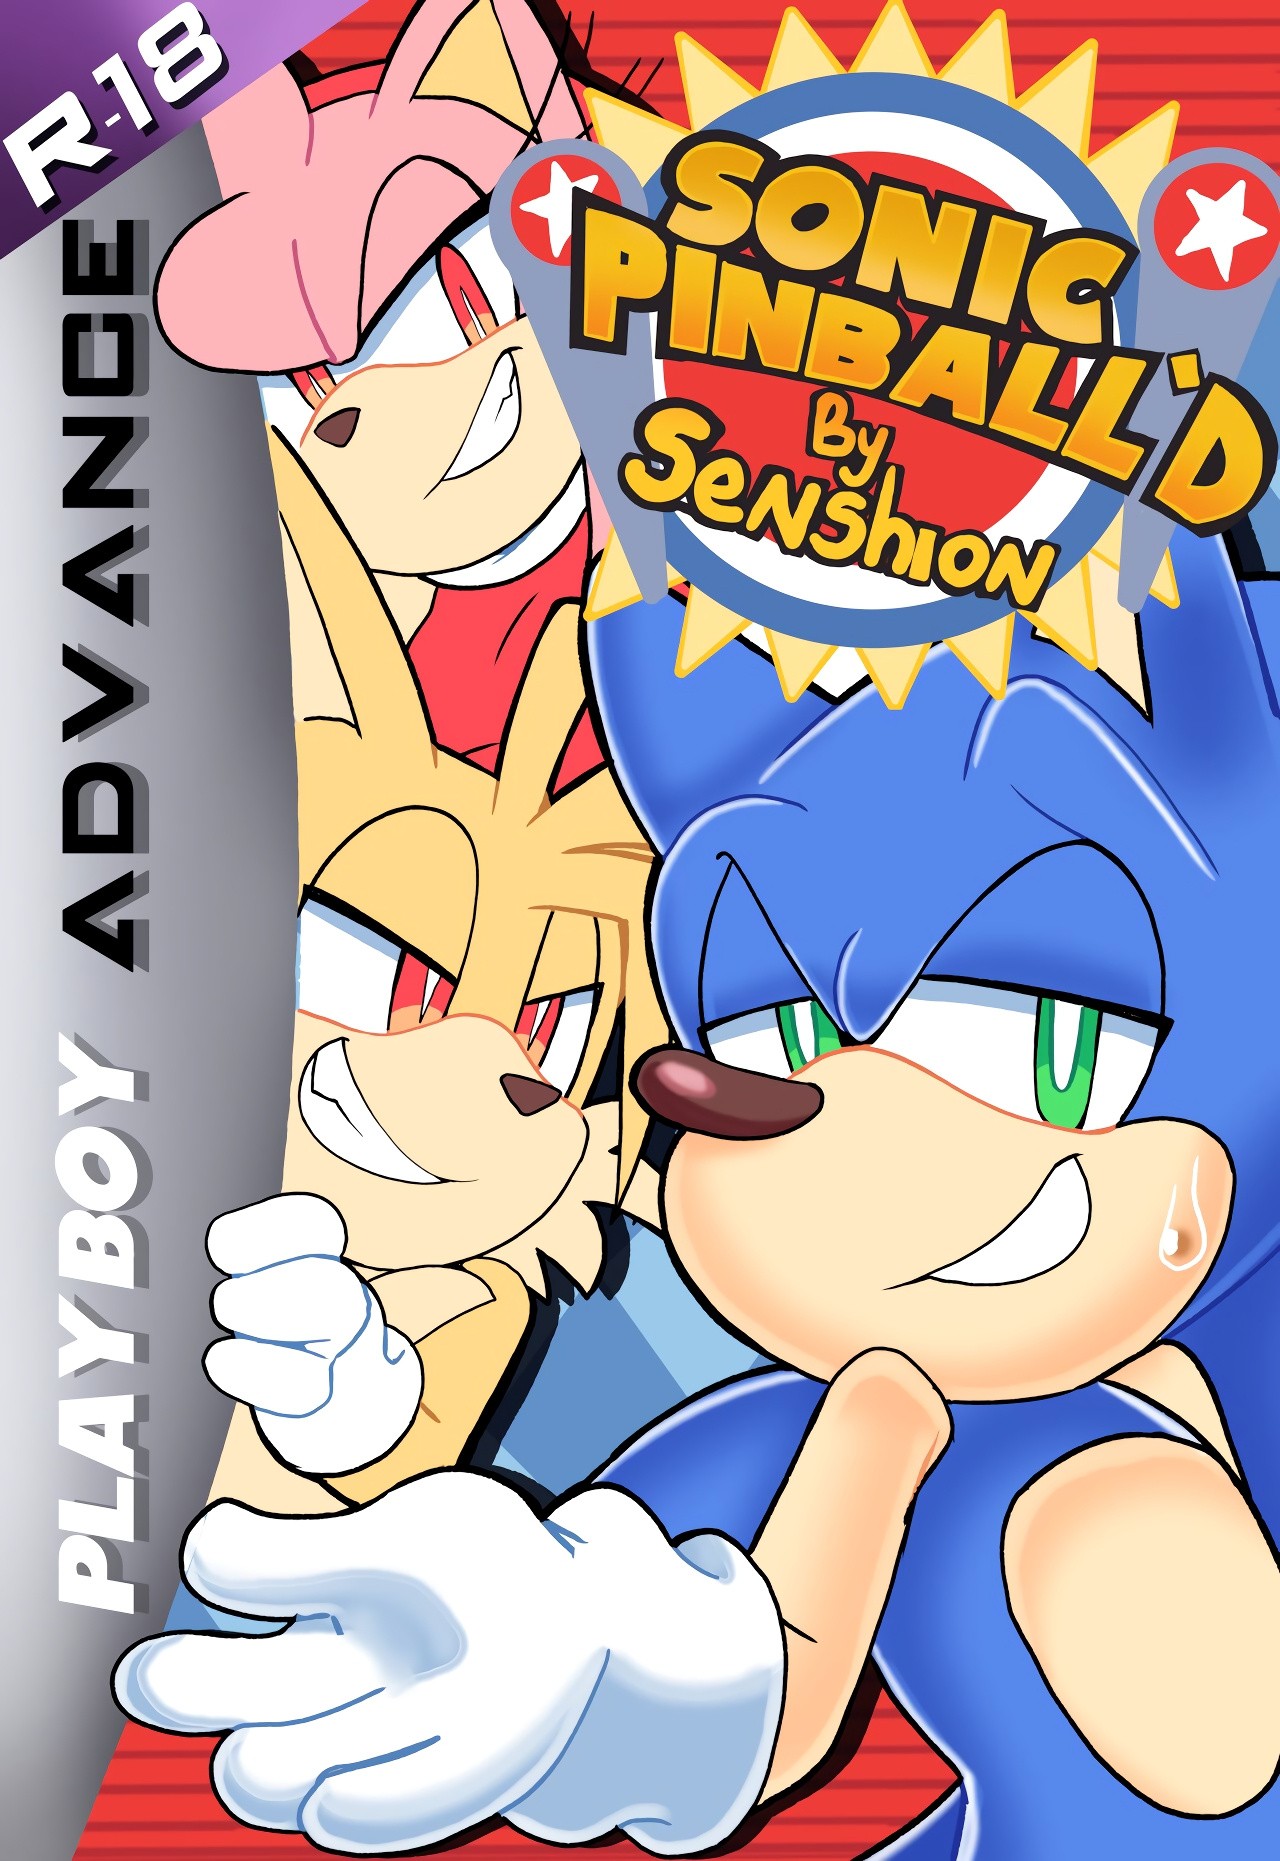 Sonic Pinball’d